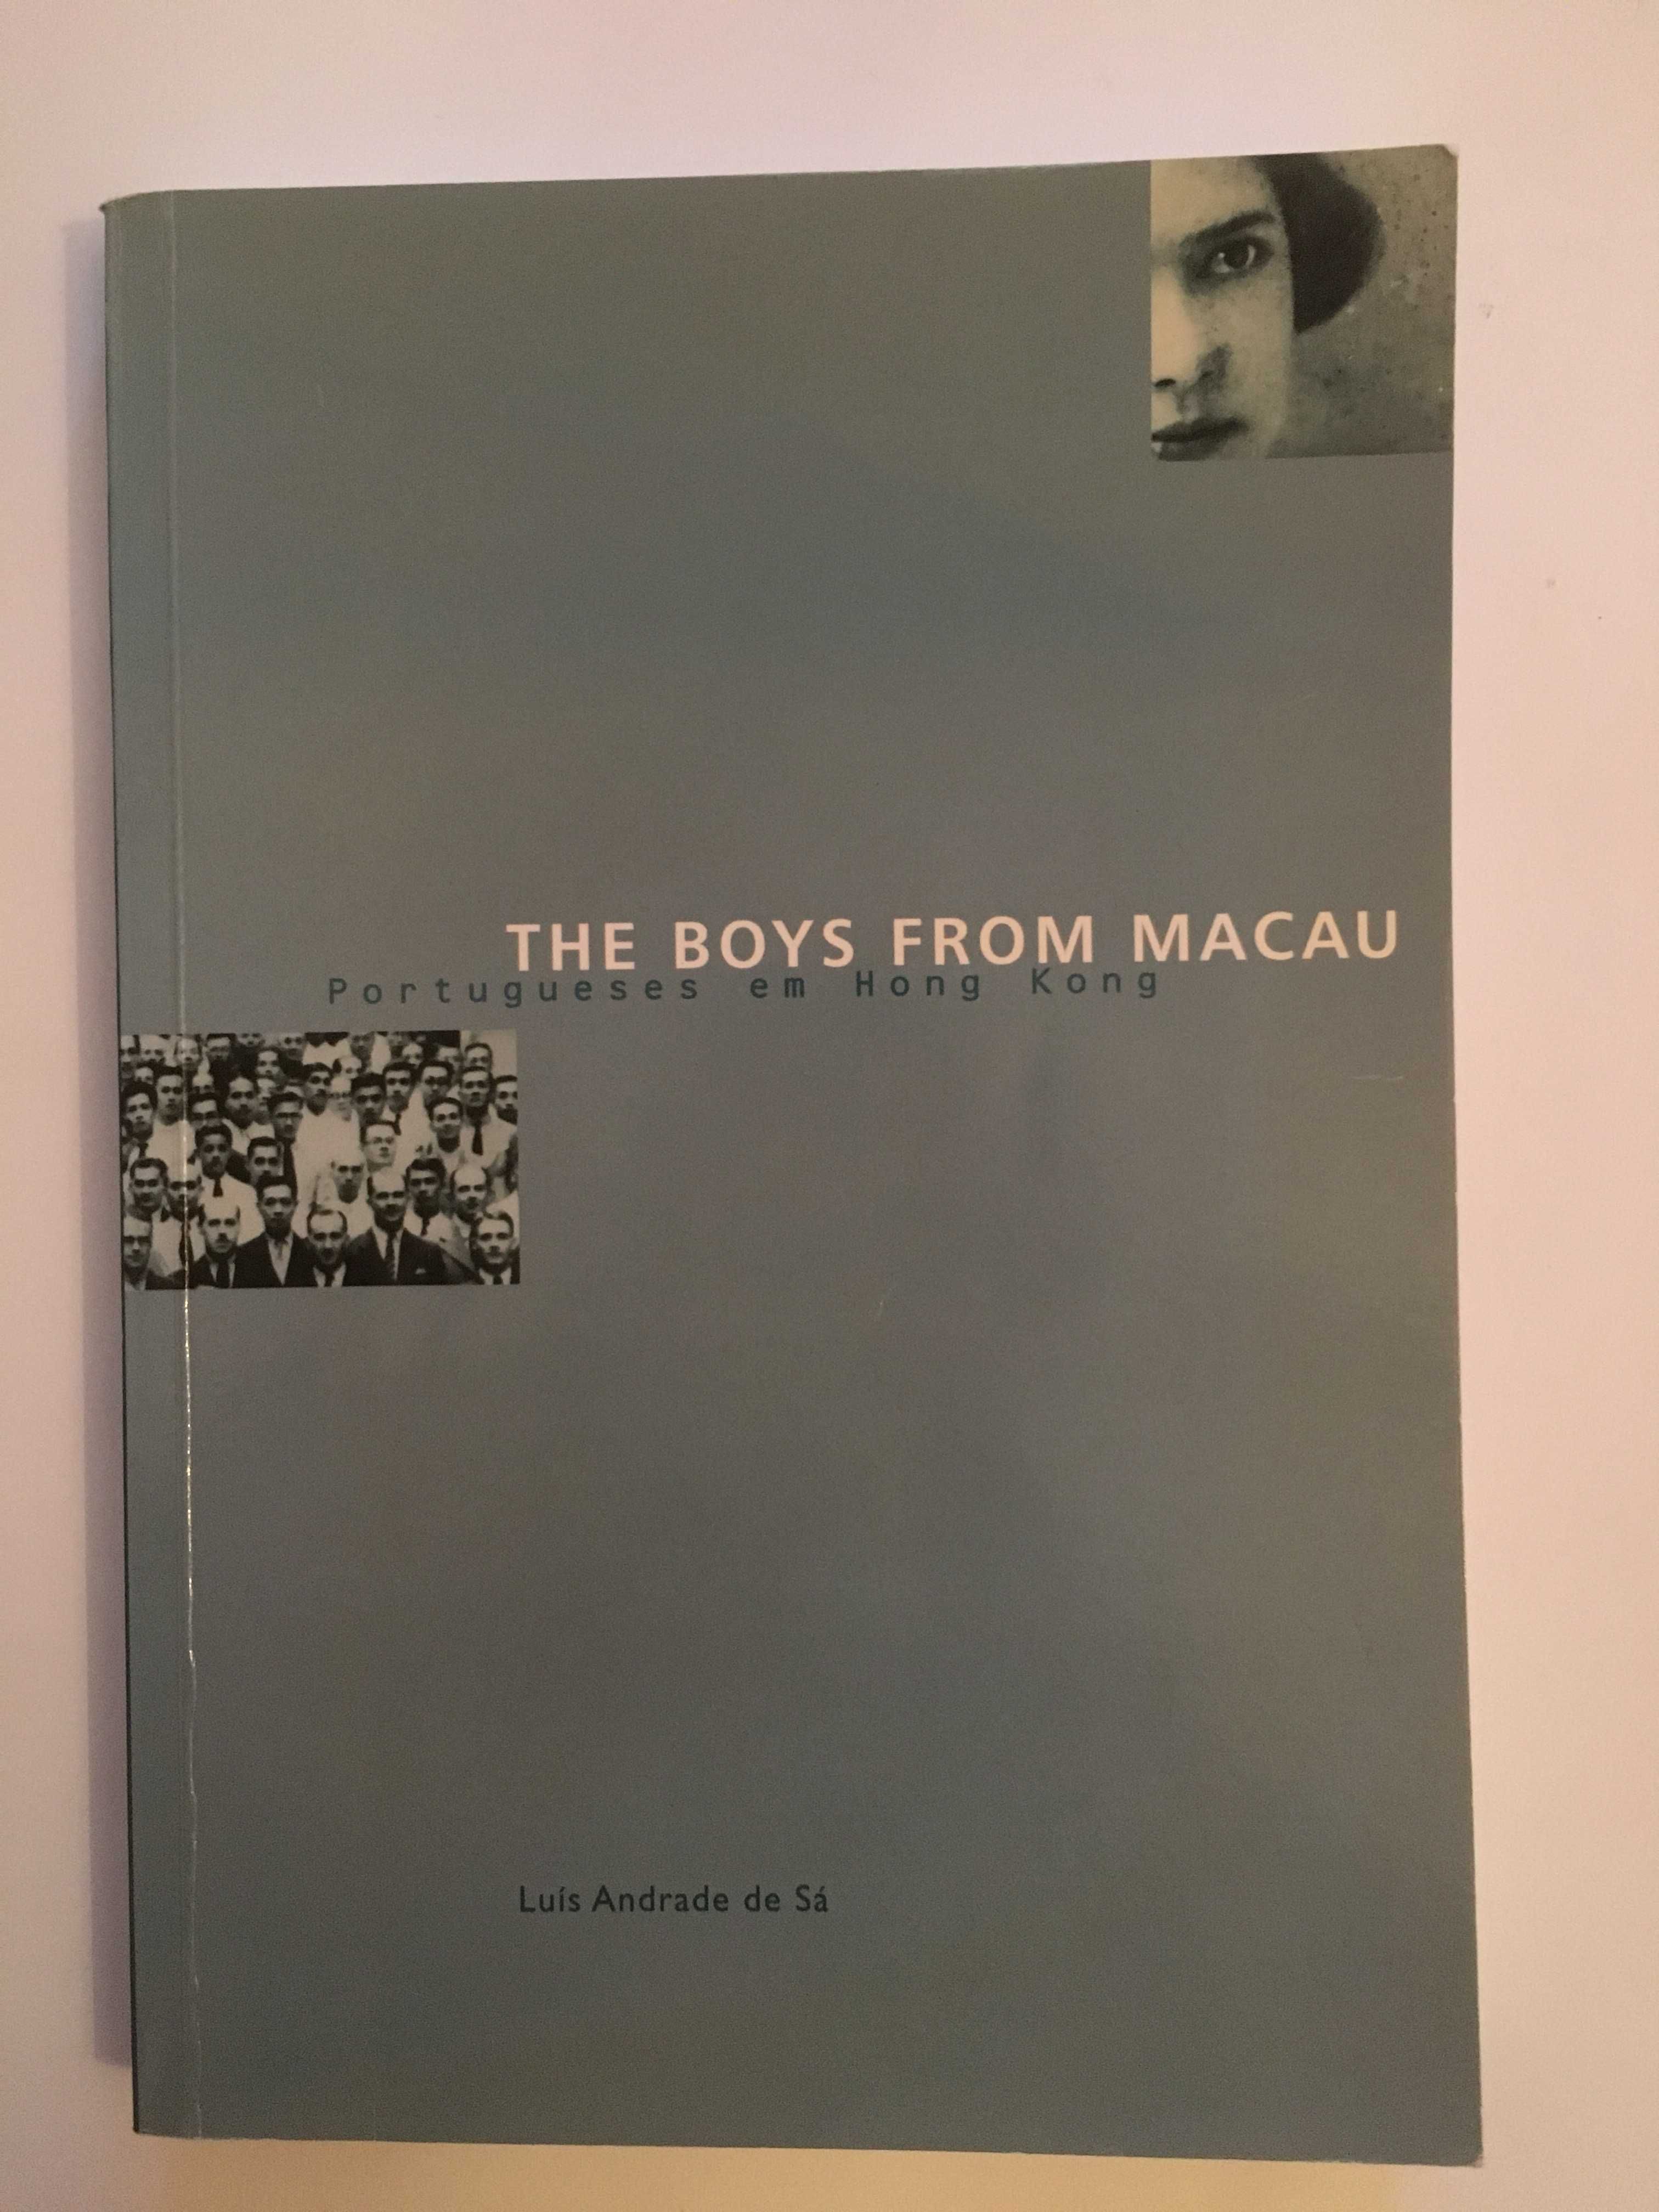 The Boys From Macau: Portugueses em Hong Kong